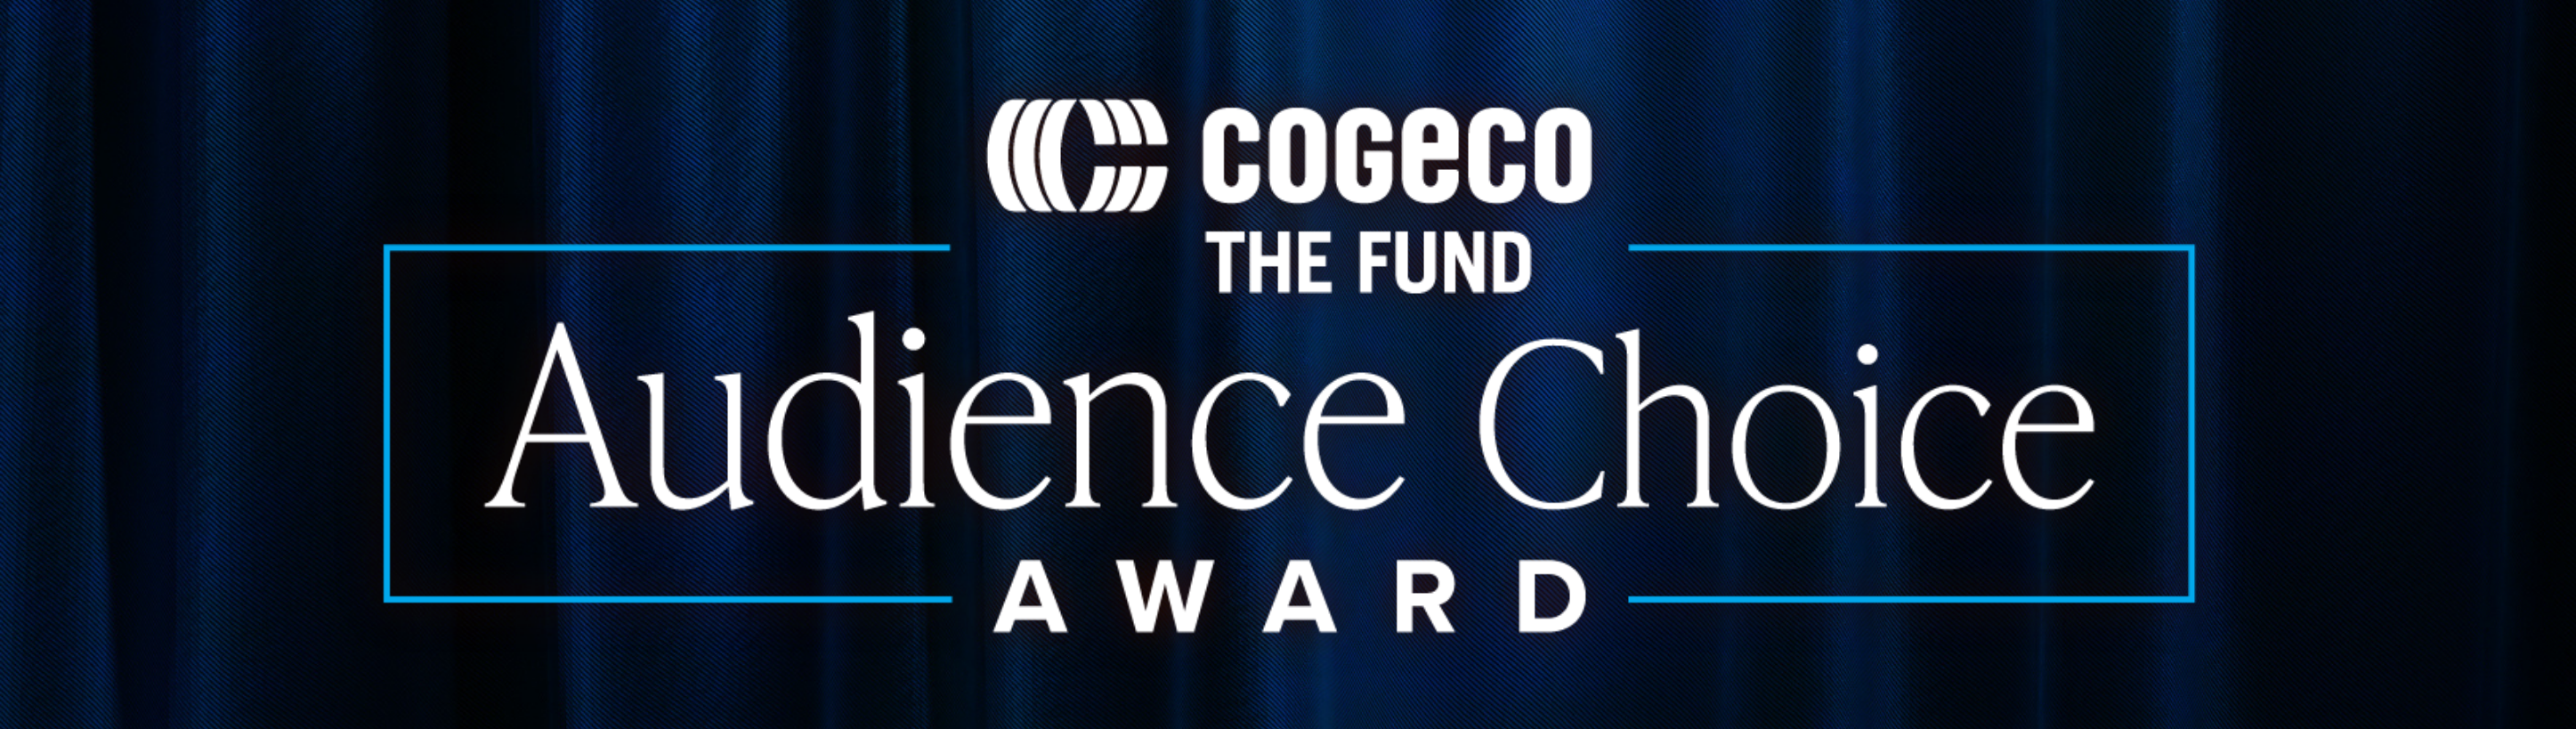 Cogeco Fund Audience Choice Award web header